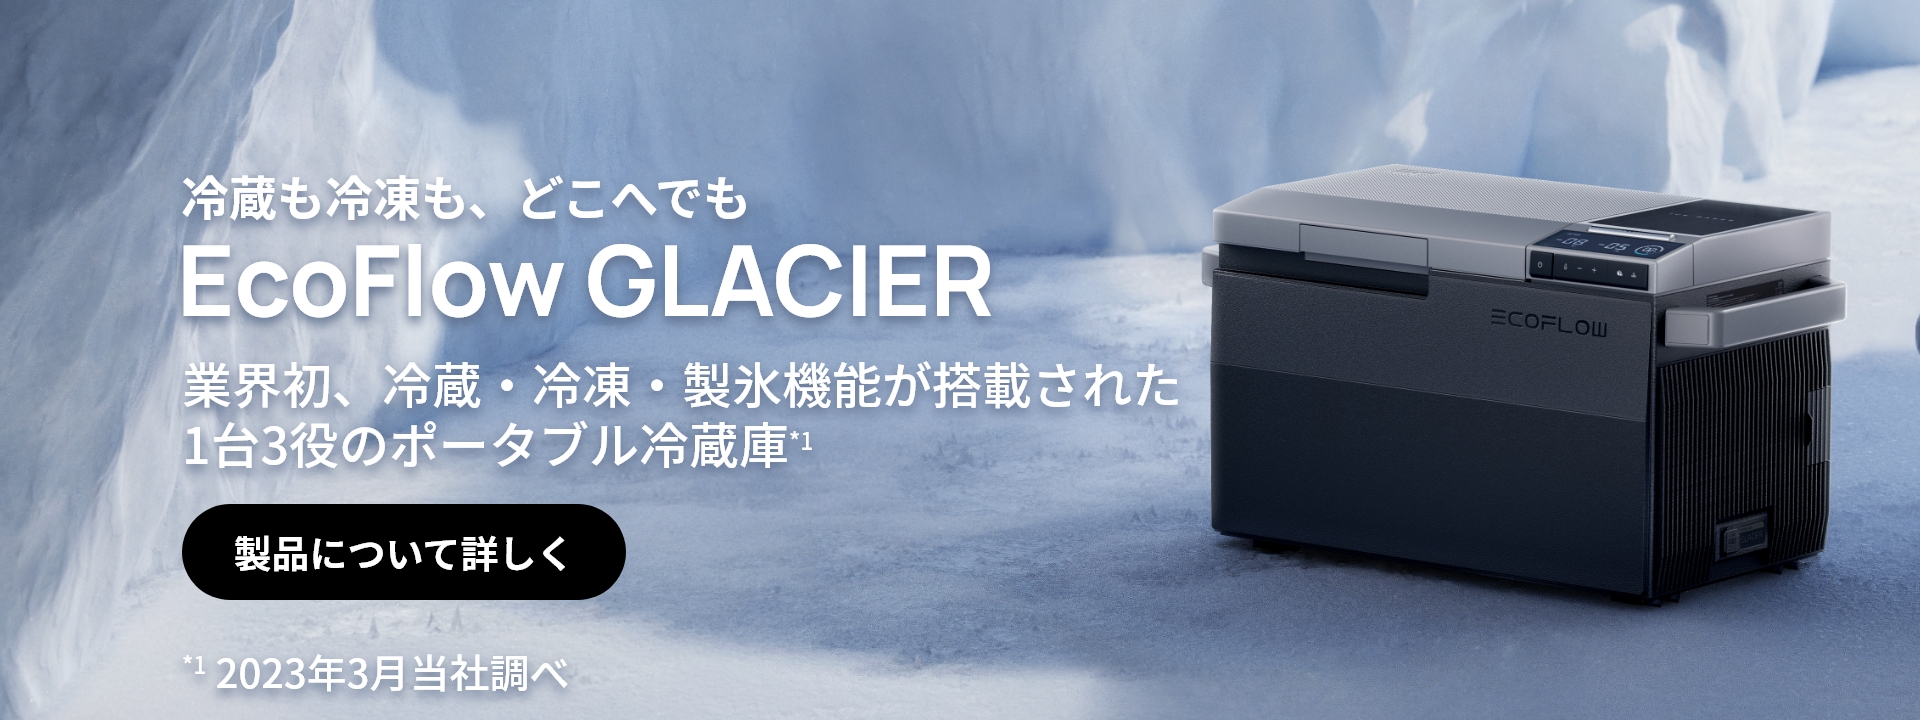 EcoFlow GLACIER専用バッテリー 298Wh容量 最長40時間稼働 GLACIERポータブル冷蔵庫専用